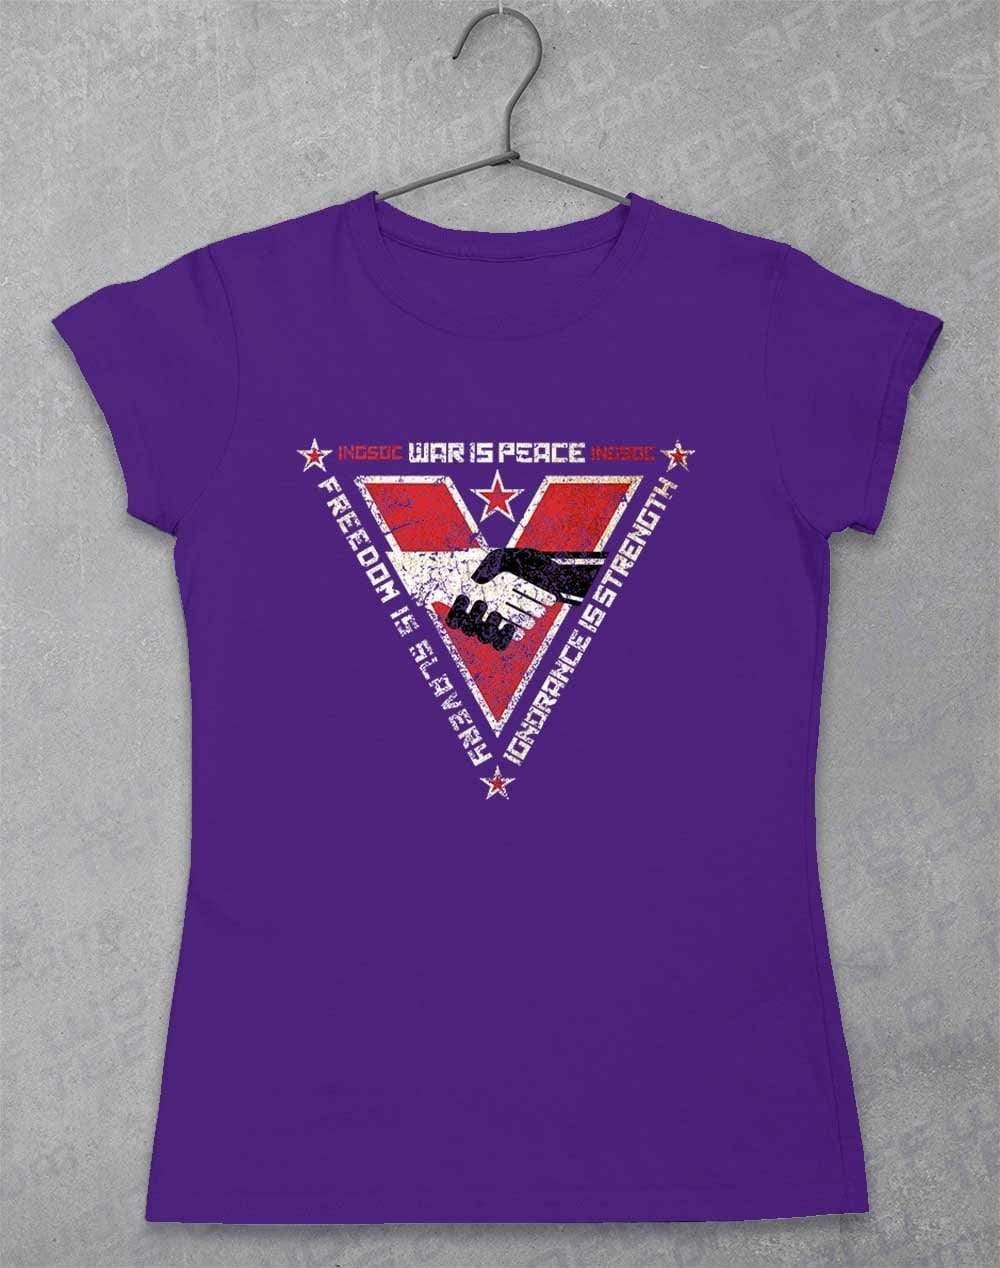 INGSOC Triangular Slogans Women's T-Shirt 8-10 / Lilac  - Off World Tees